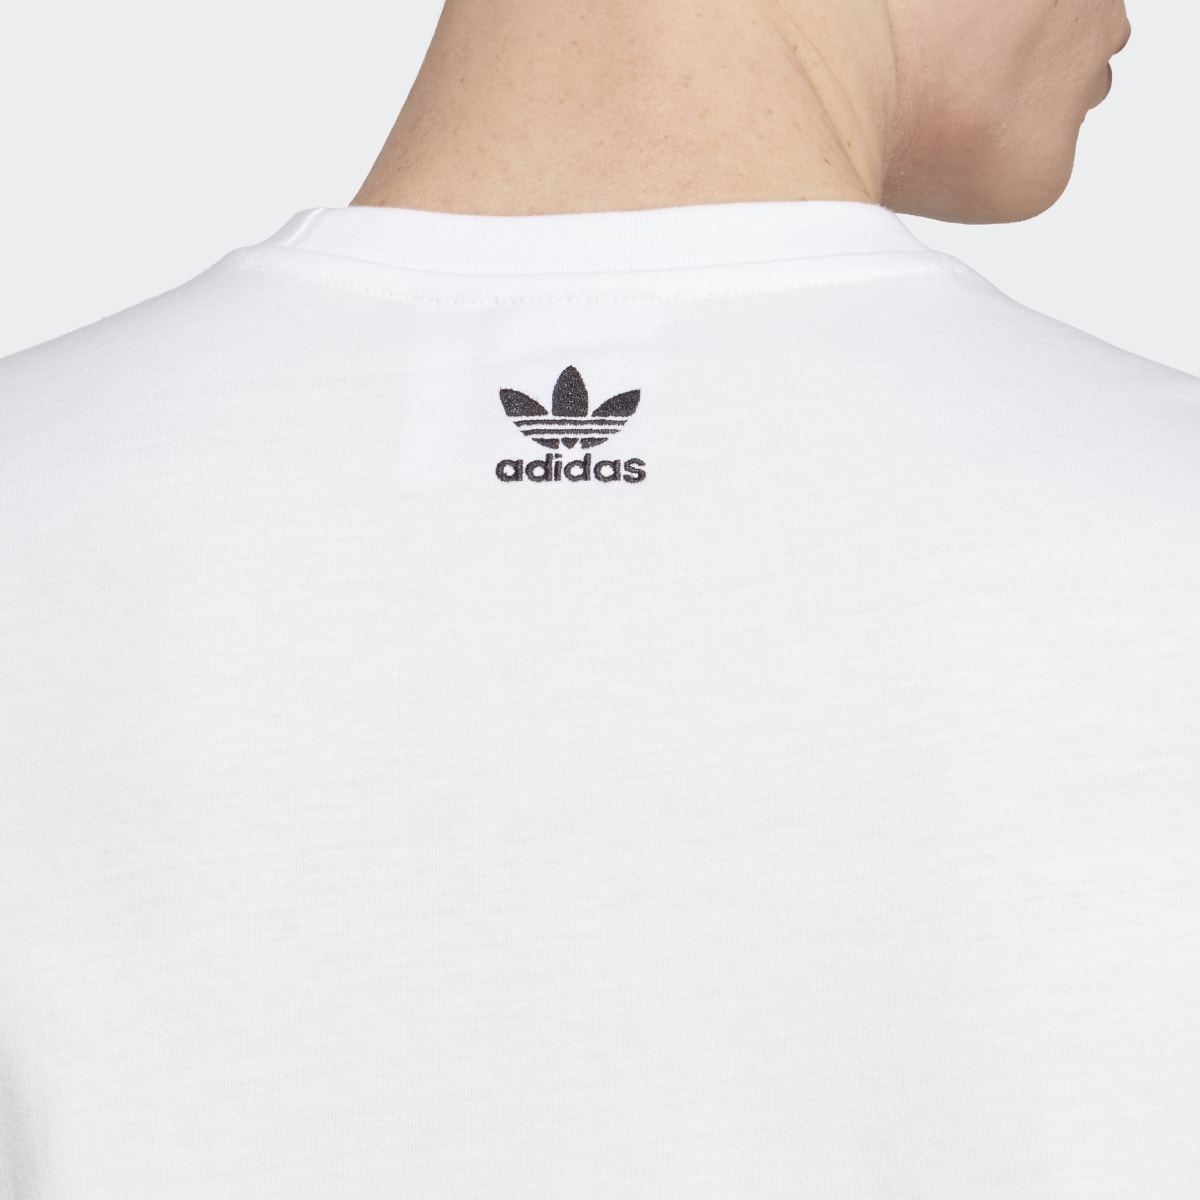 Adidas T-shirt Graphics New Age. 7